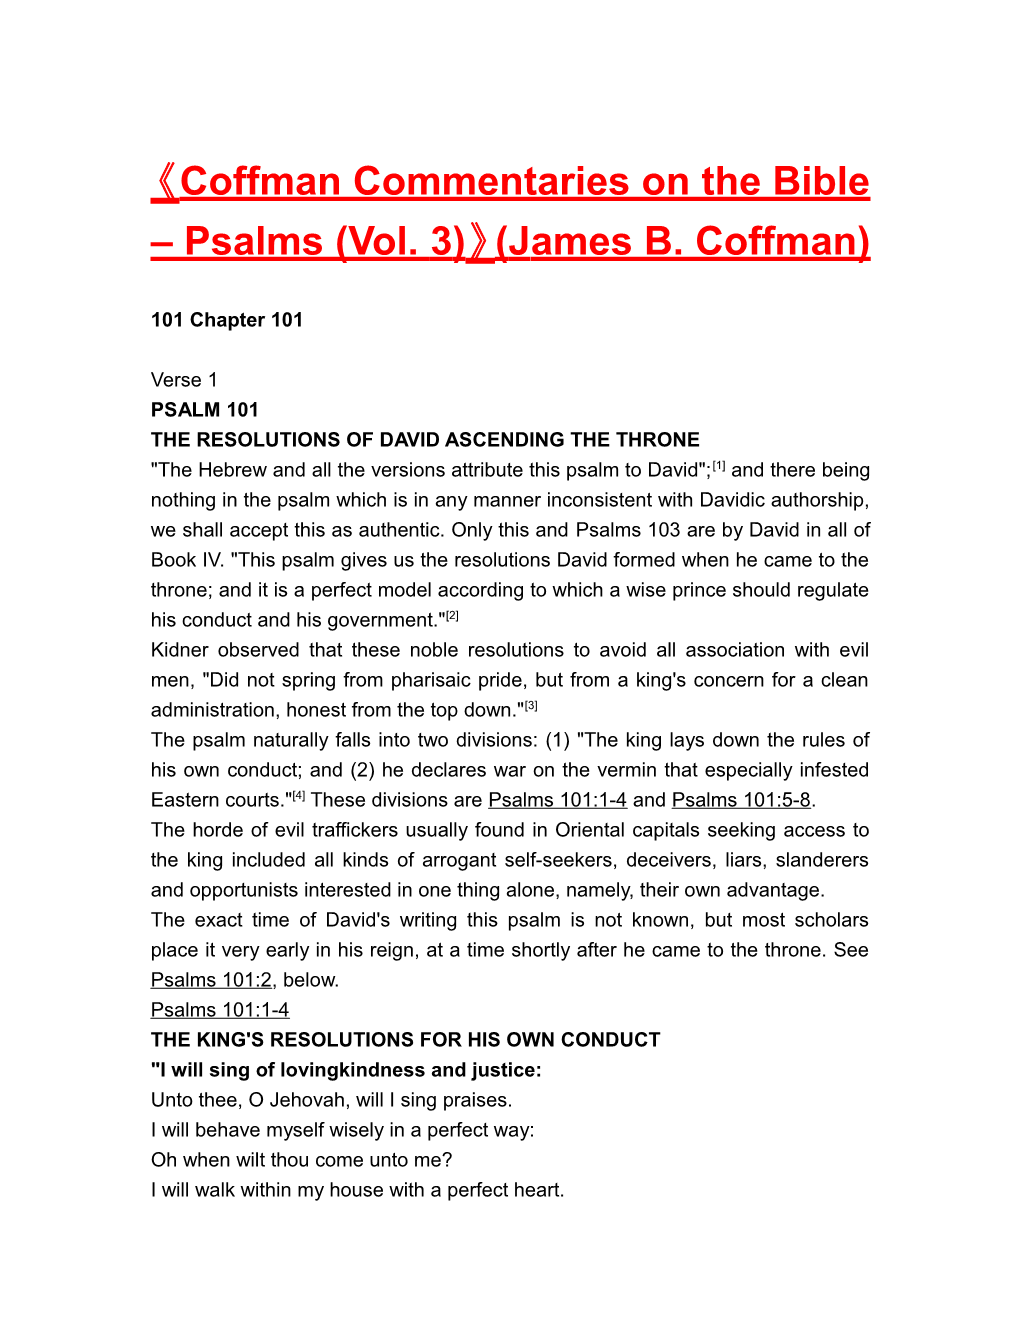 Coffman Commentaries on the Bible Psalms (Vol. 3) (James B. Coffman)